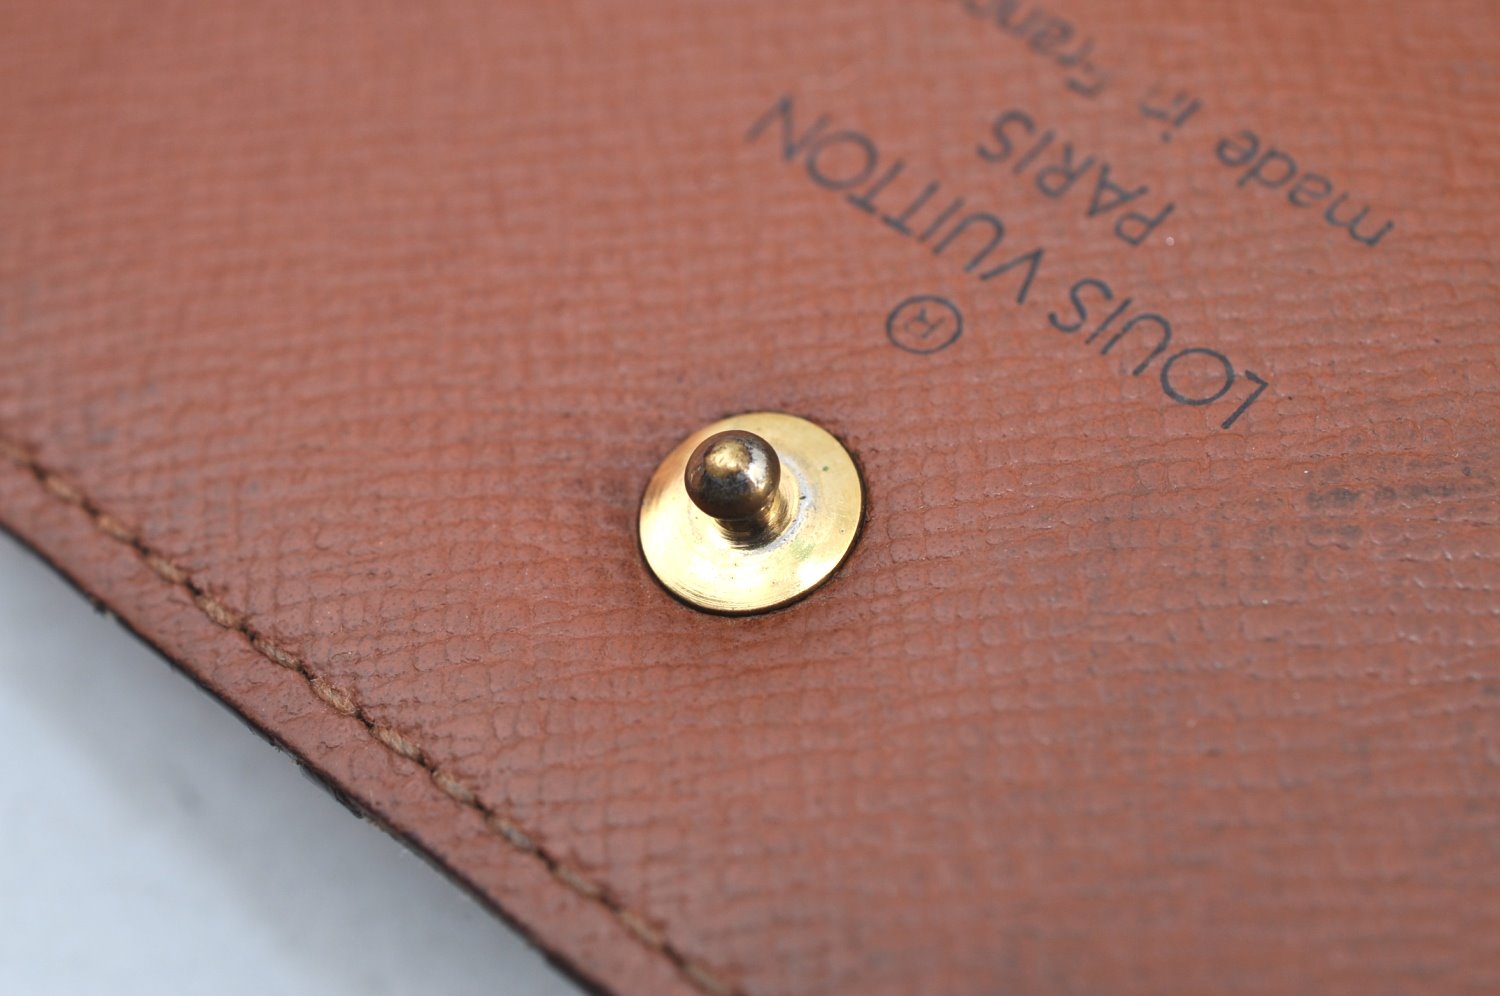 Authentic Louis Vuitton Monogram Porte Tresor International M61215 Wallet K4291